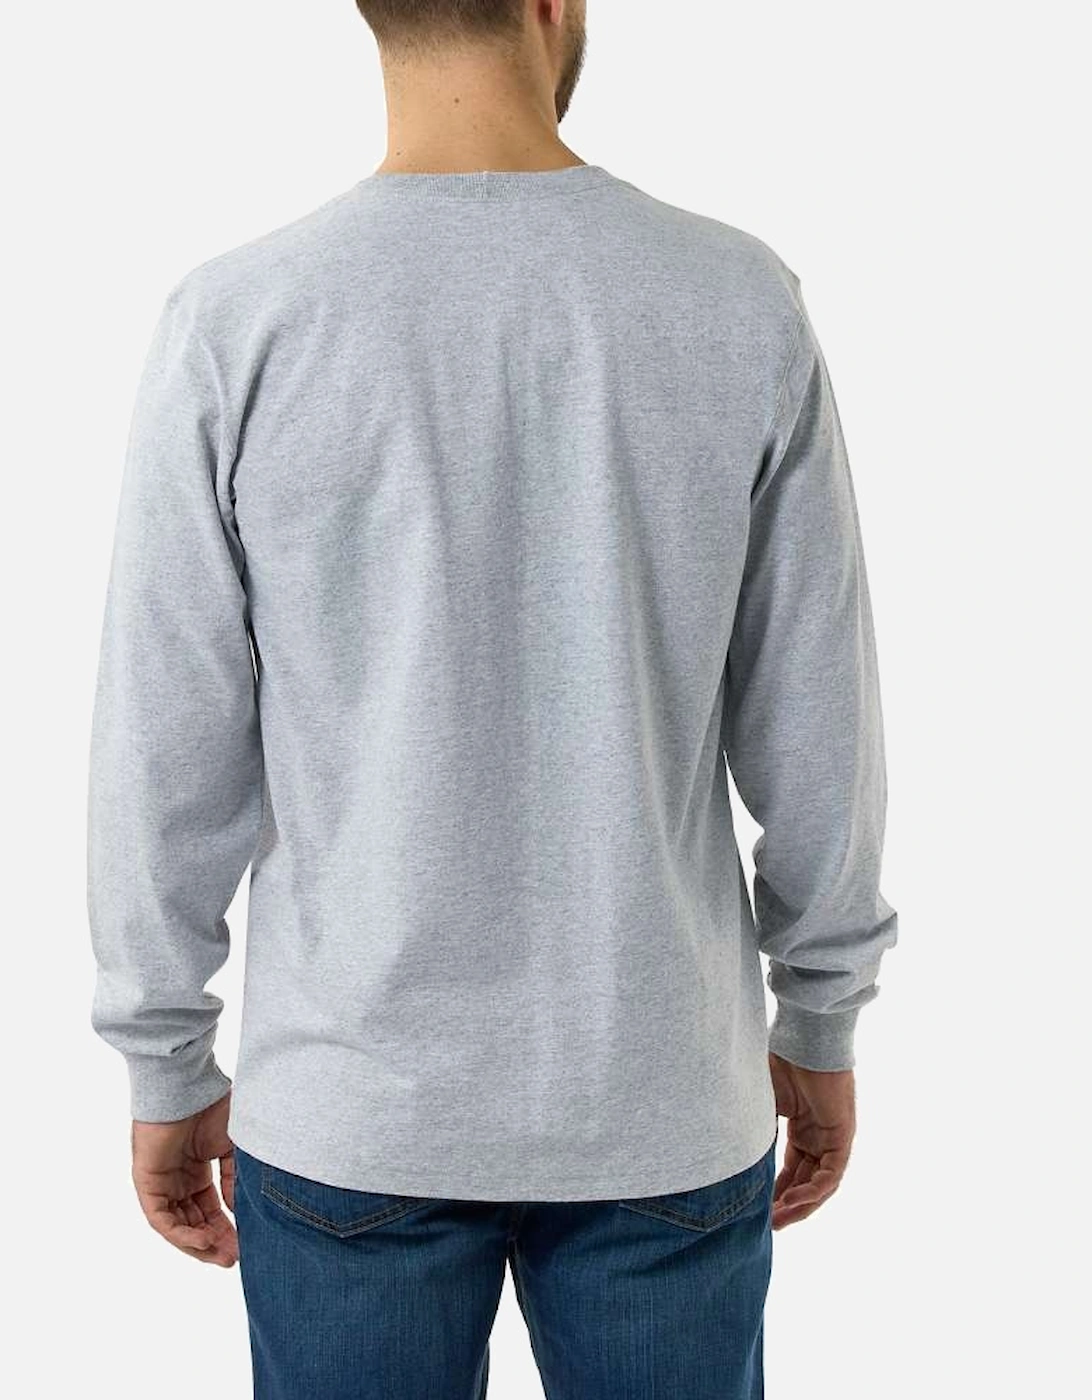 Carhartt Mens Script Graphic Relaxed Fit Long Sleeve T Shirt